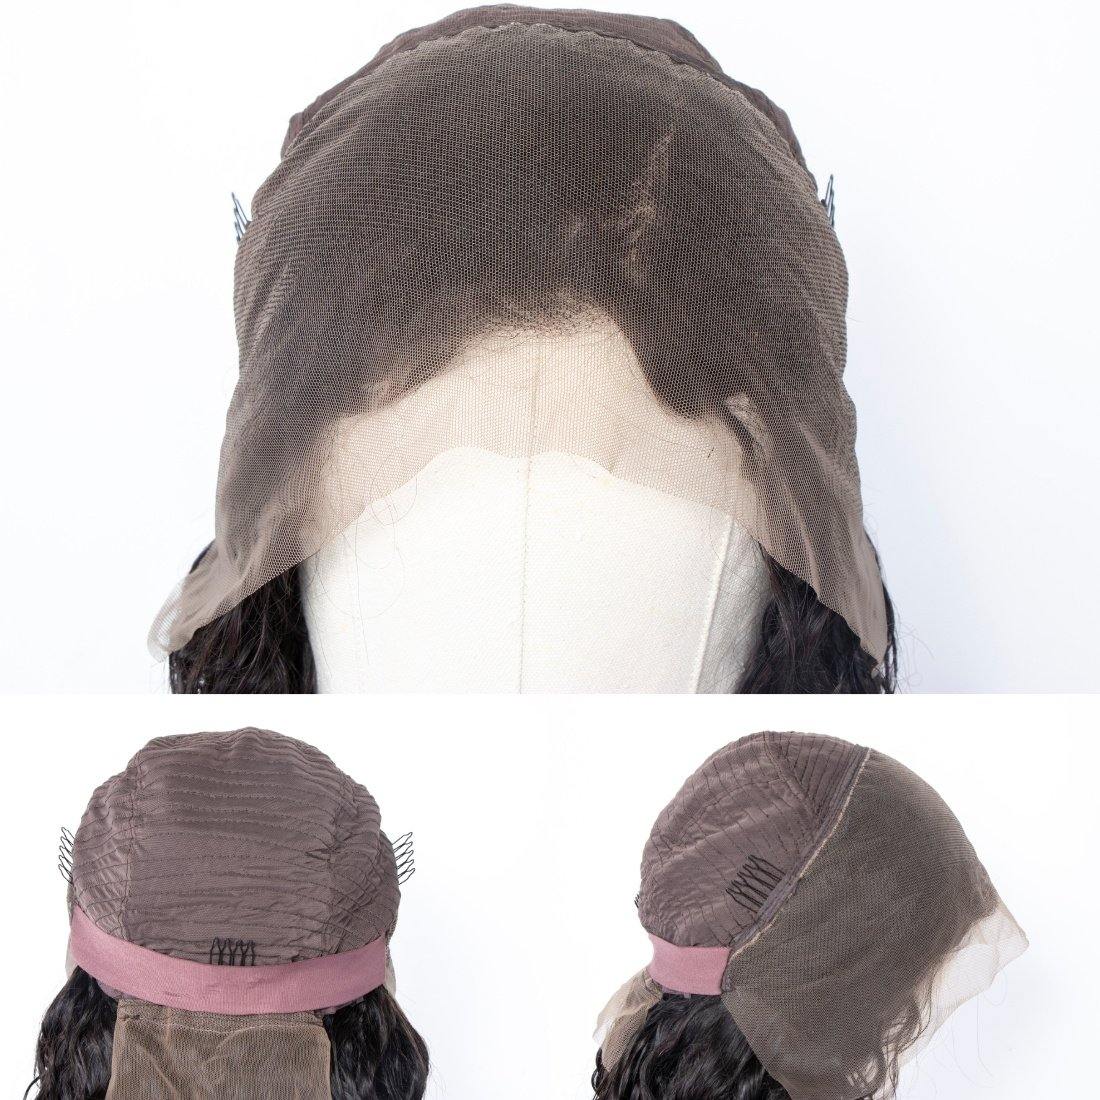 Transparent 13x4 Lace Closure Wig Water Wave 180% Density Human Hair Wig - Seyna Hair